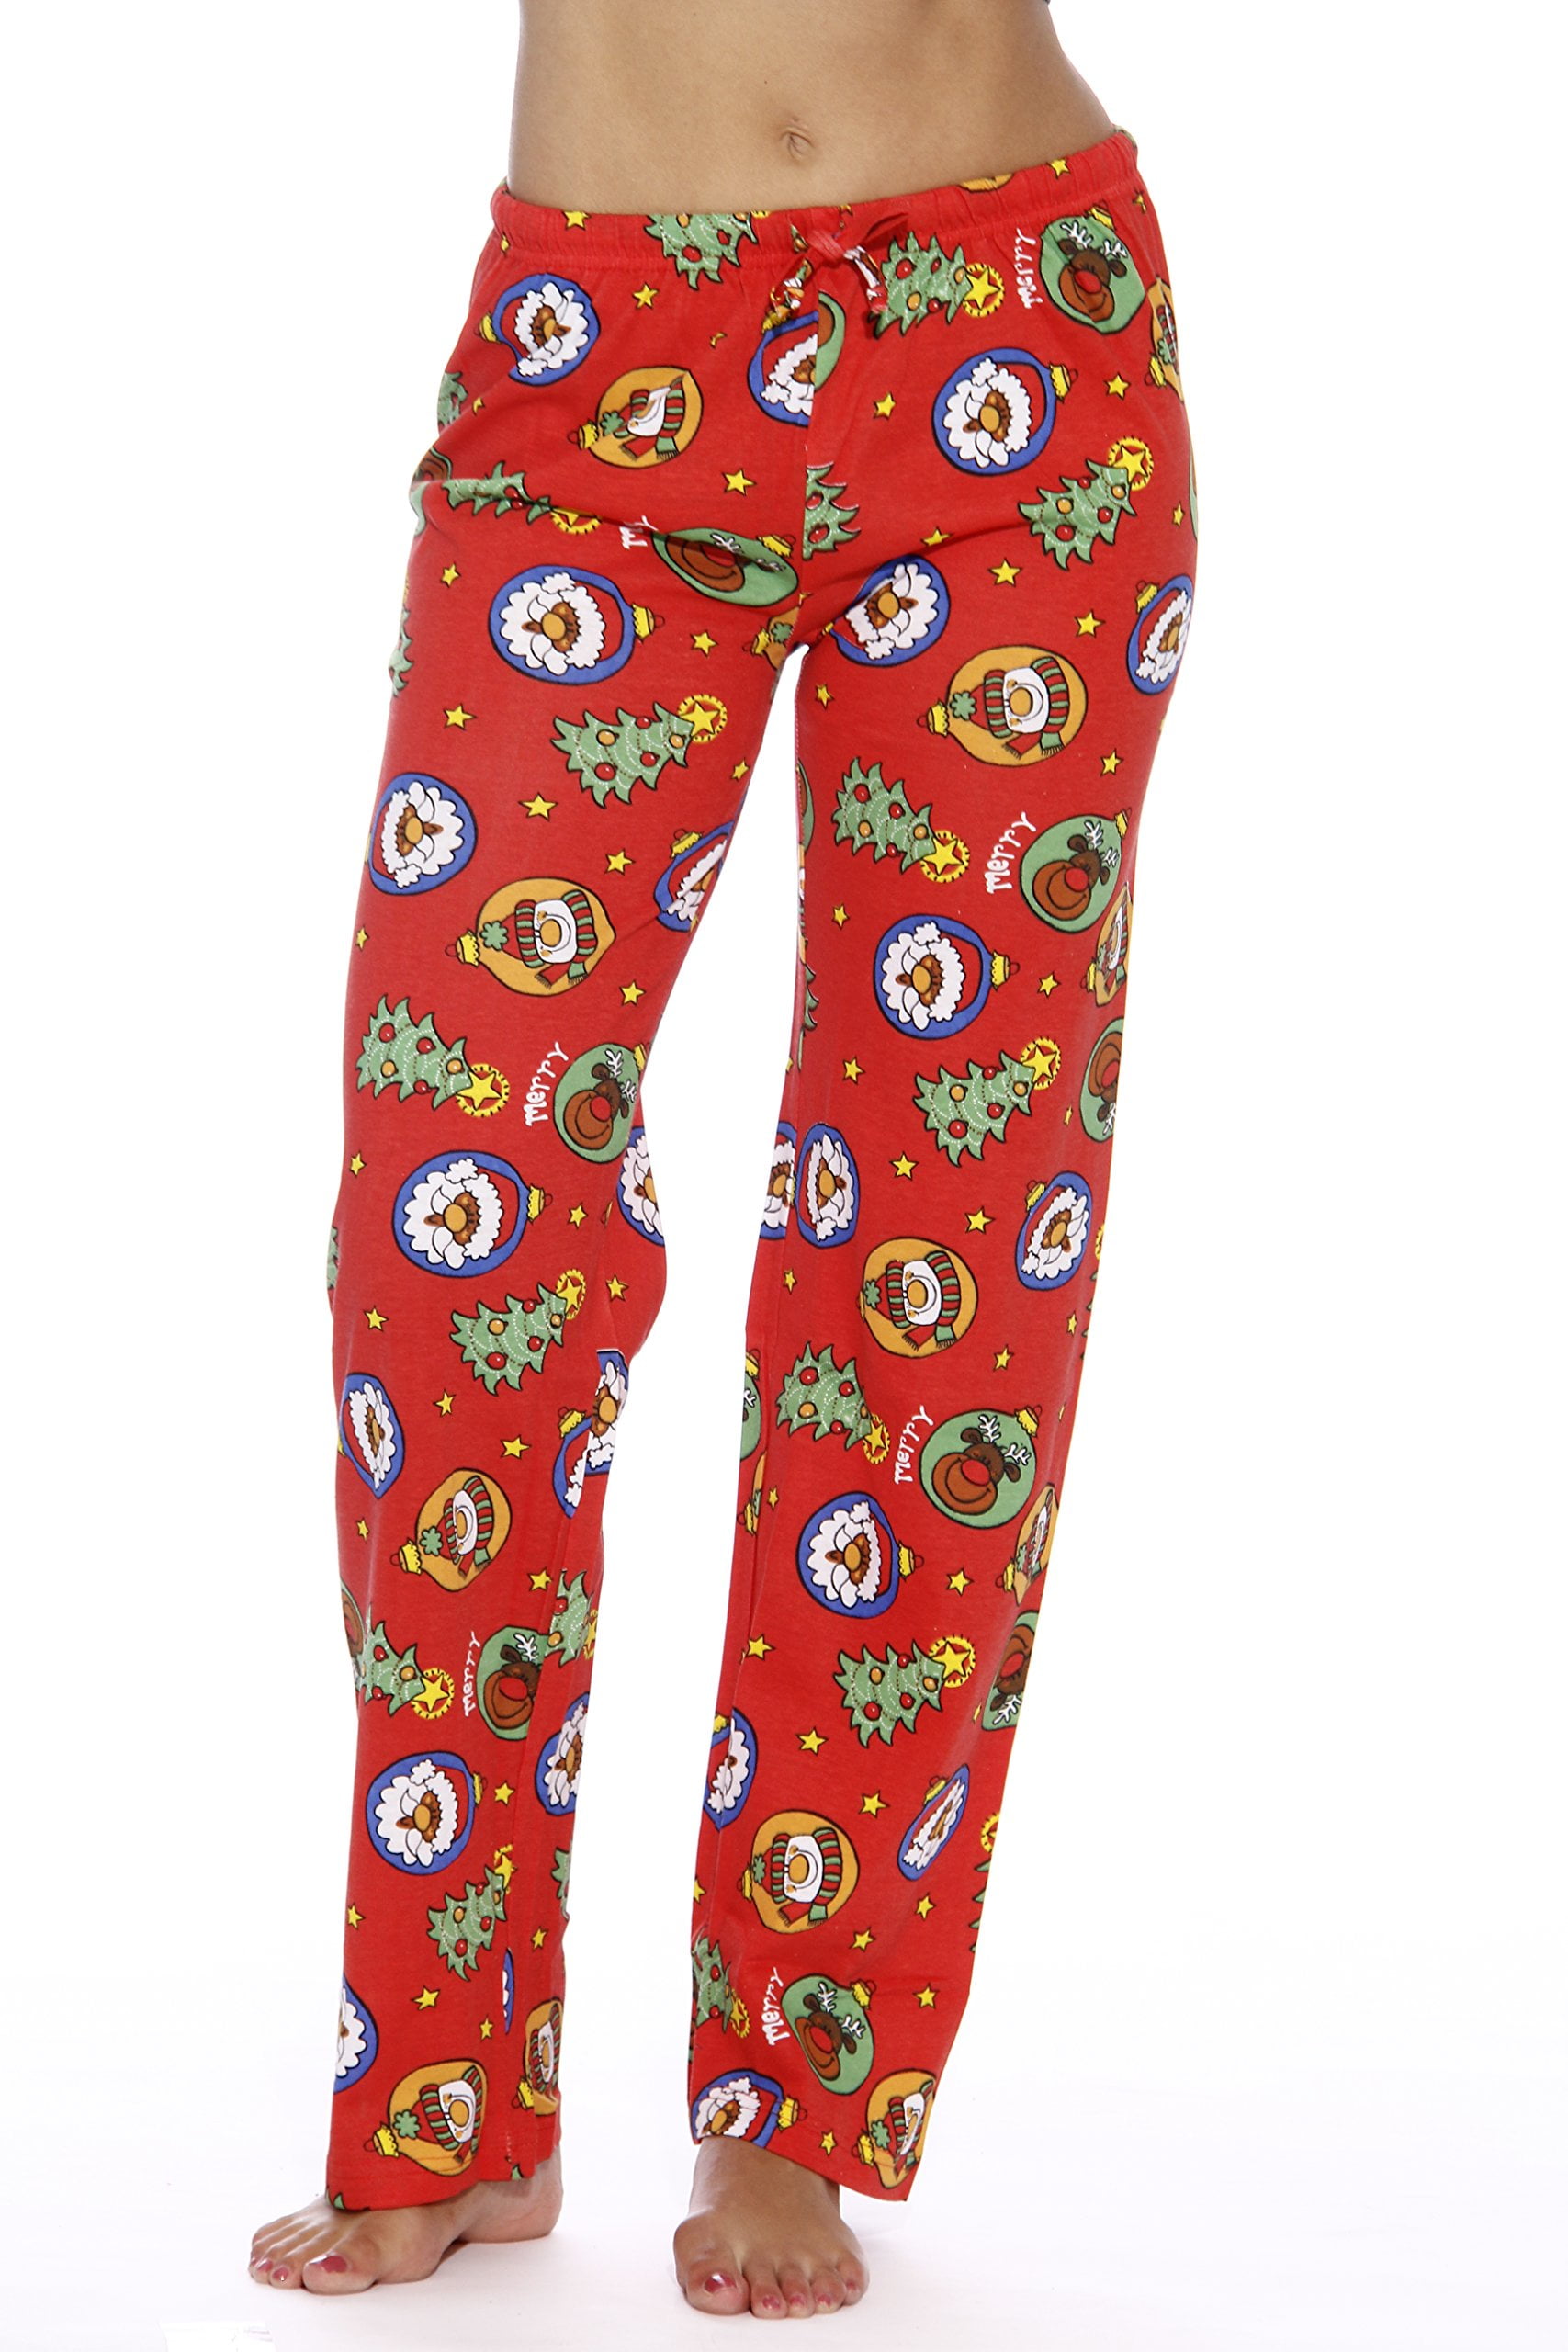 Just Love Women Pajama Pants / Sleepwear / Holiday Prints (Snowman